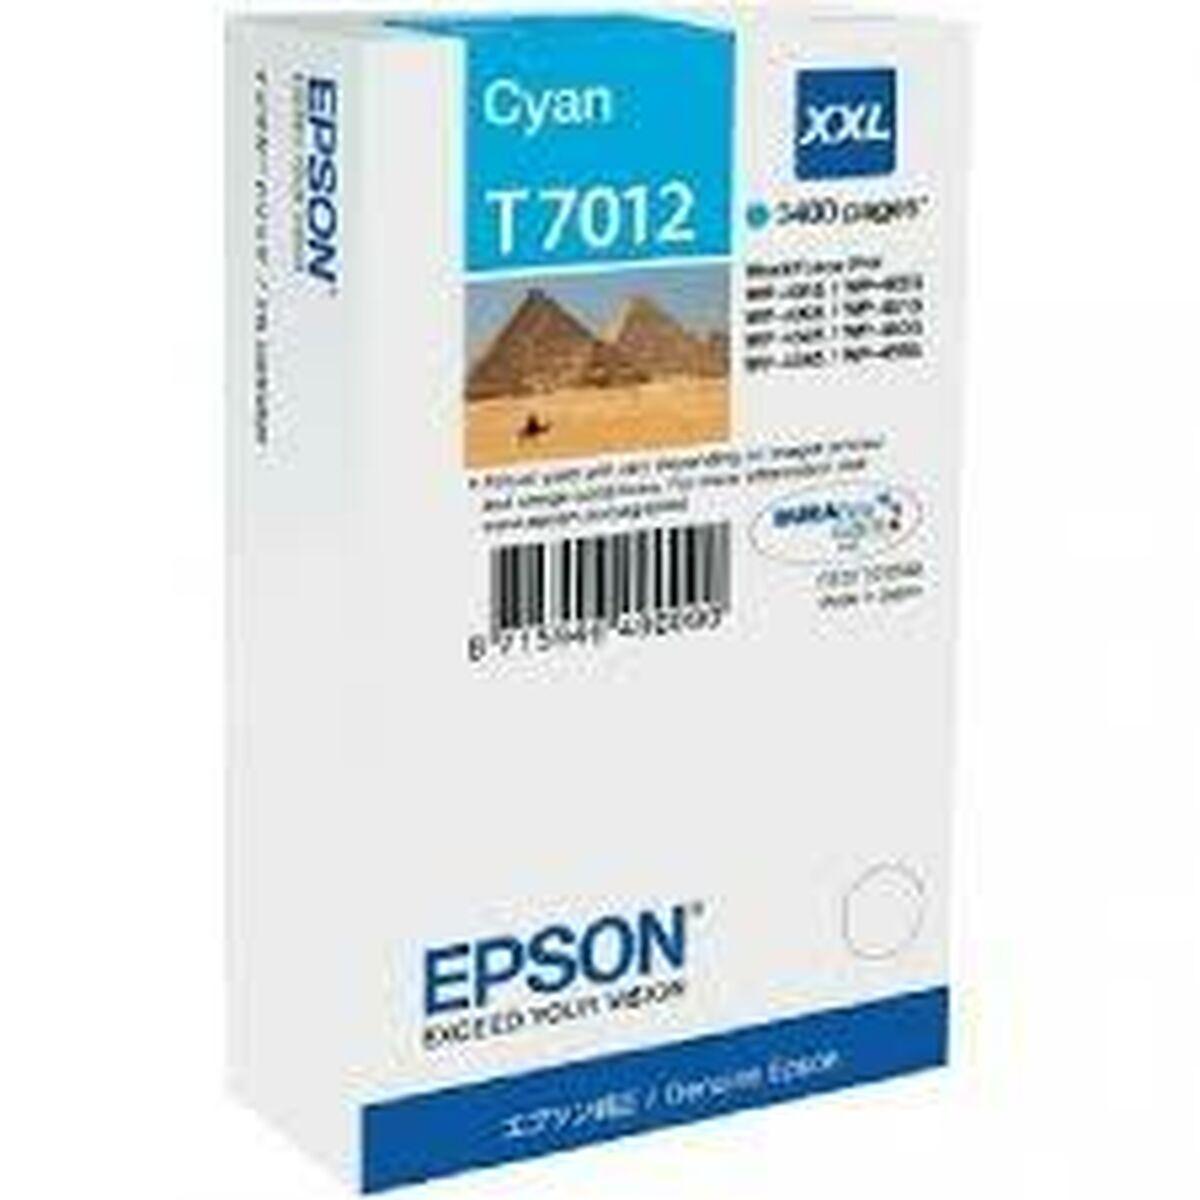 Se Epson T7012 C blækpatron - Kompatibel - Cyan 36 ml C13T70124010 hos Boligcenter.dk